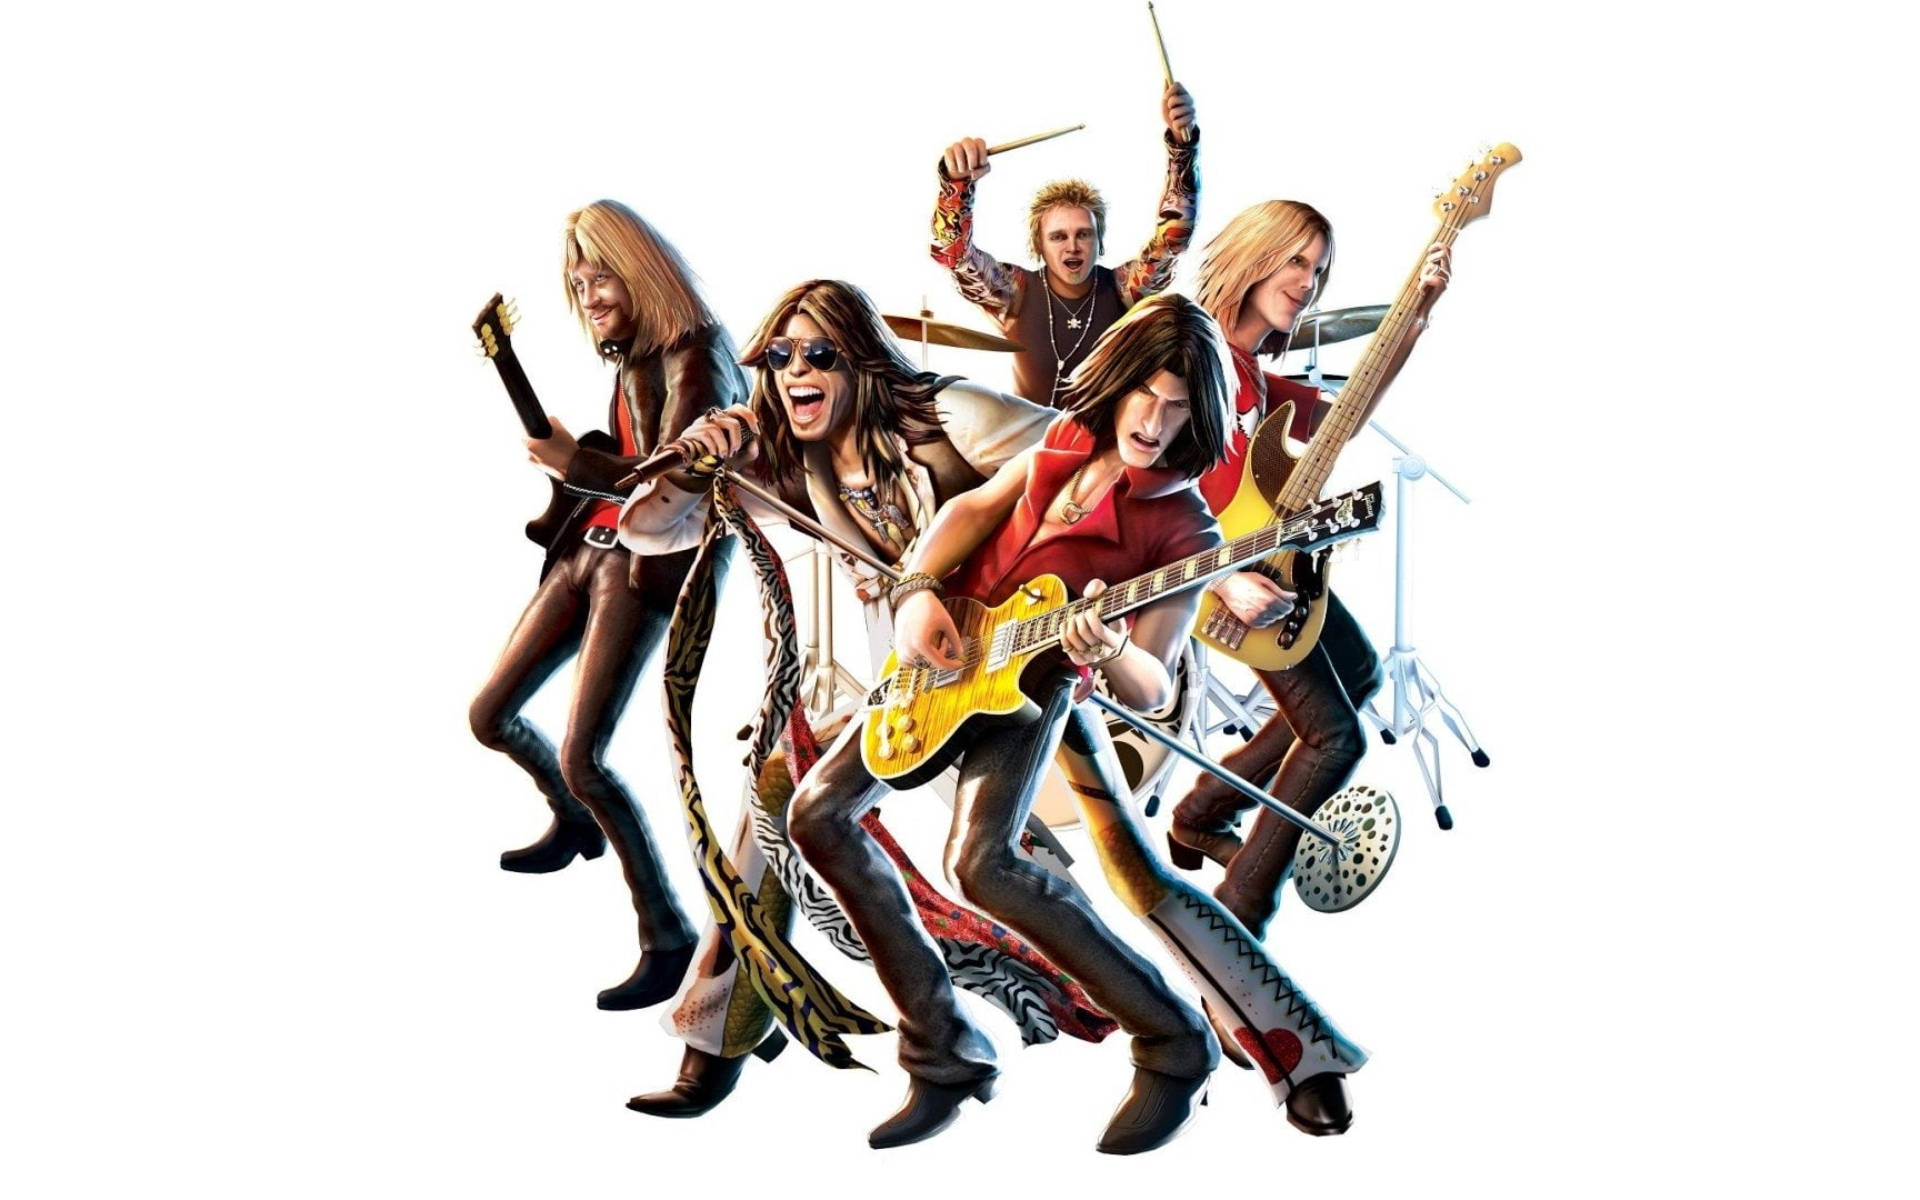 Guitar Hero Aerosmith Band Background